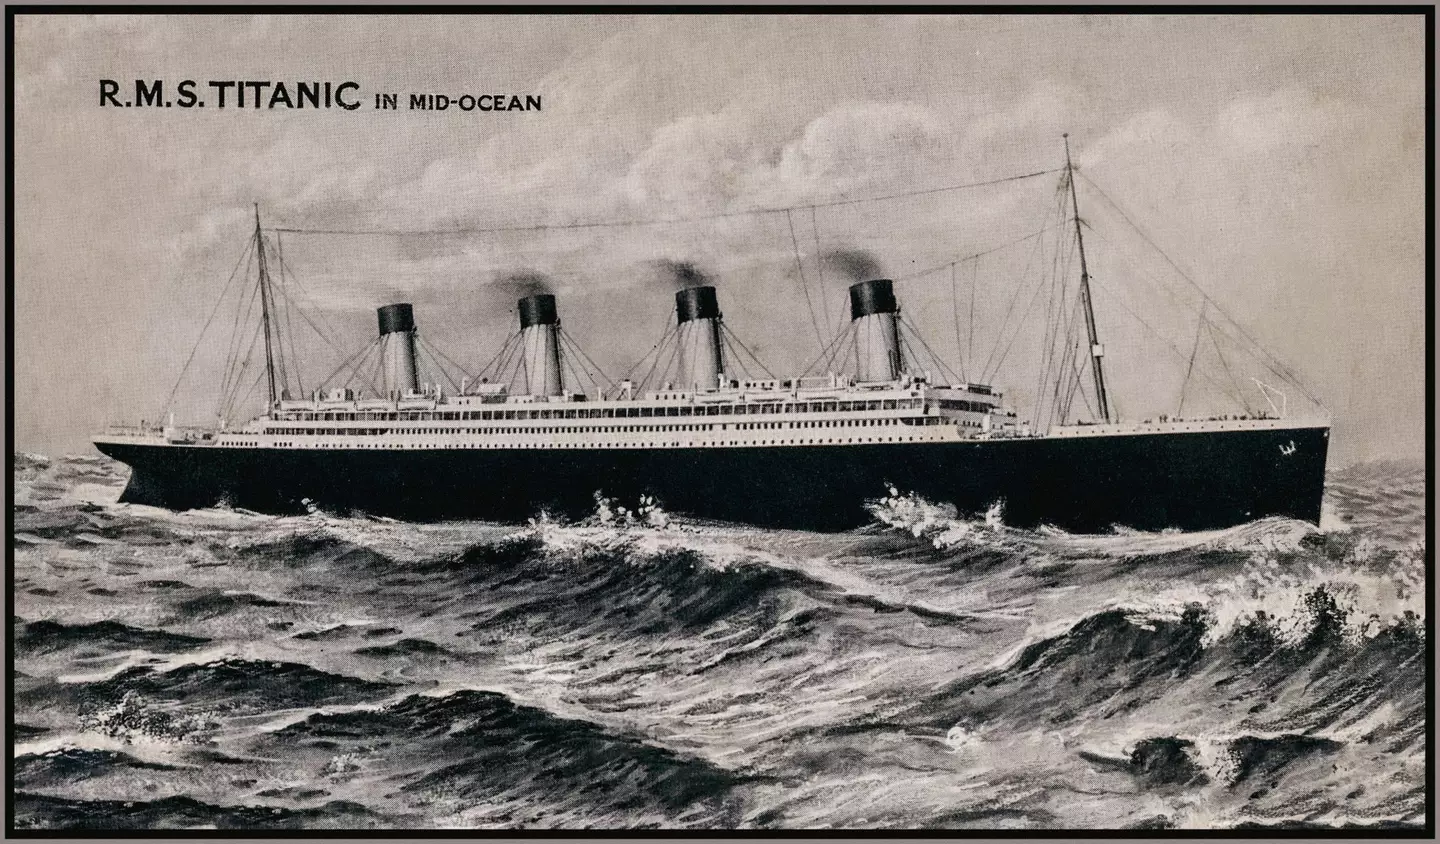 The Titanic set sail from Southampton on 10 April, 1912.